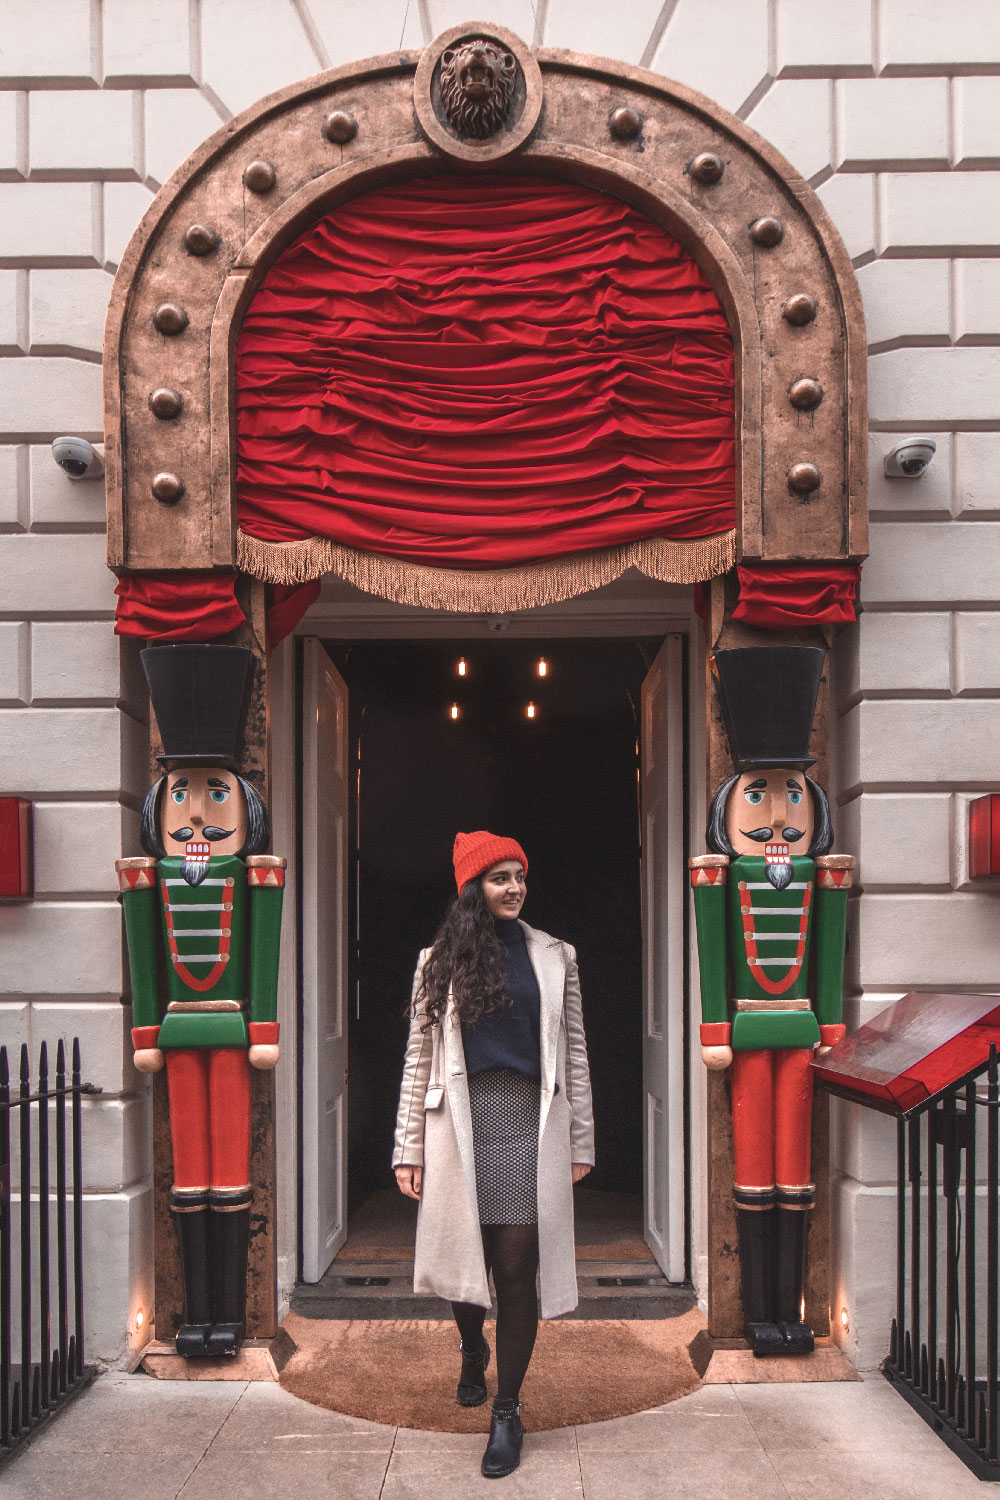 Secret London - The Christmas facades just keep getting better